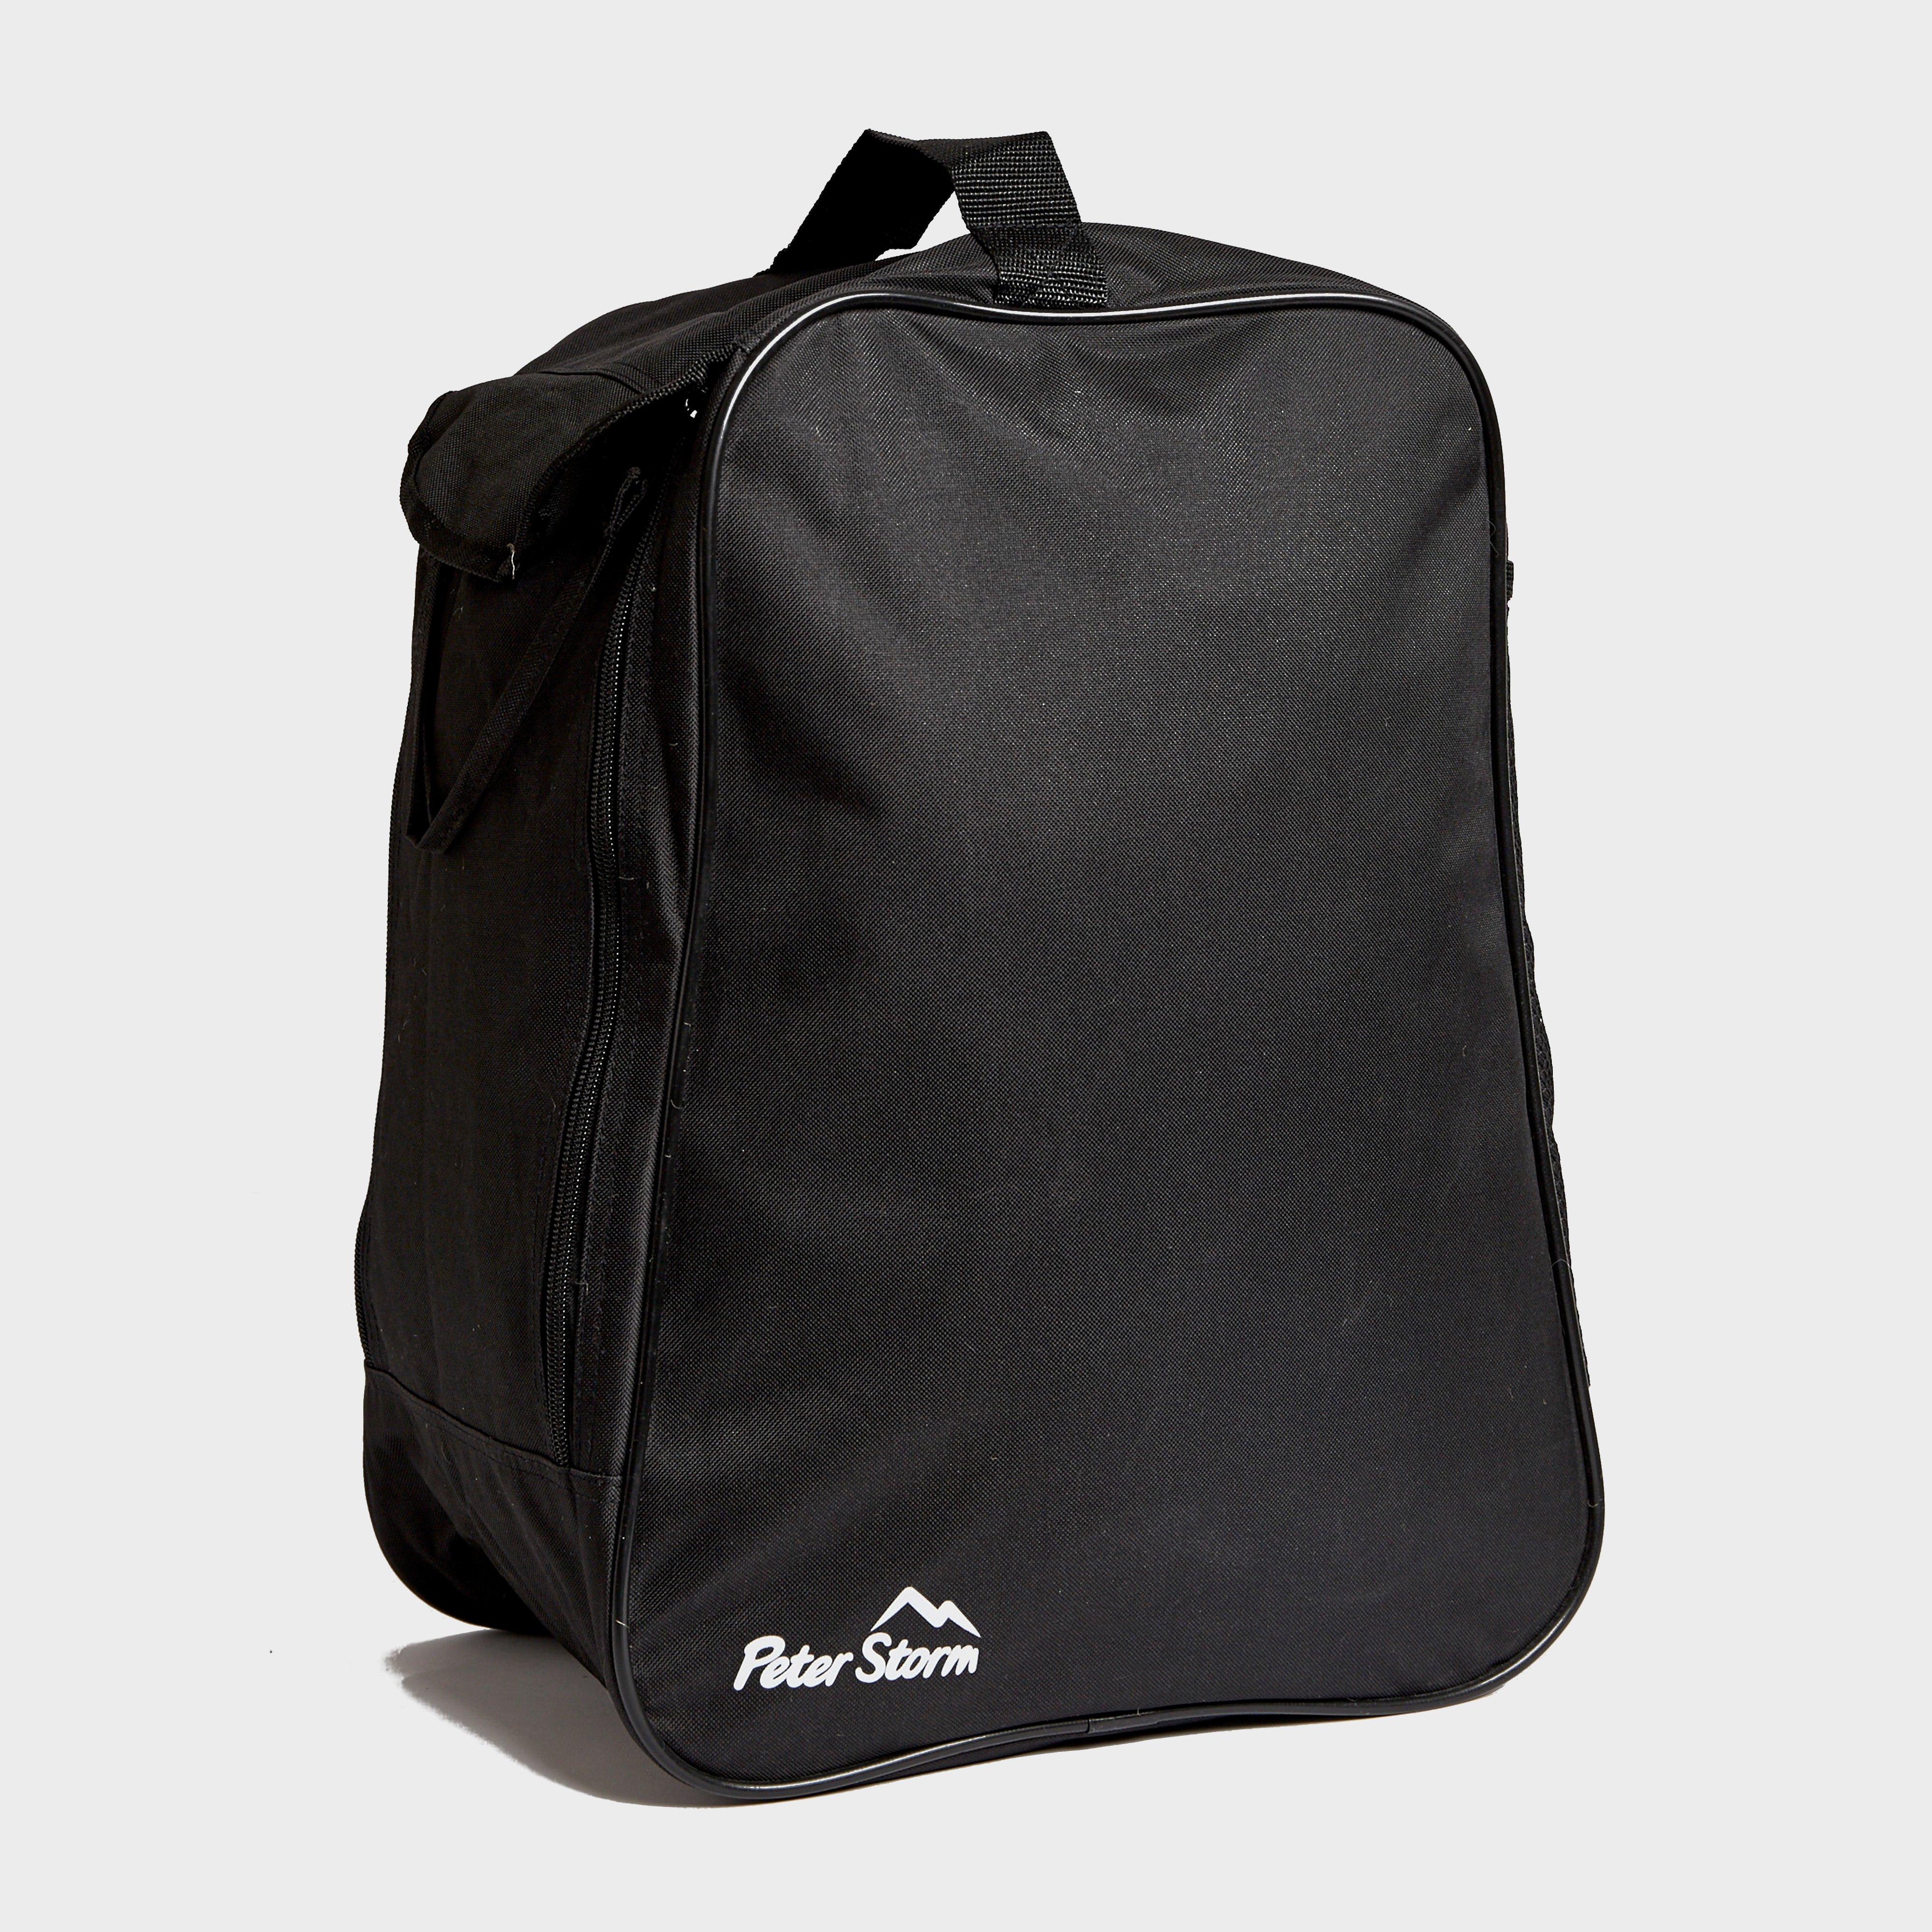 Peter Storm Wellington Boot Bag - Black/blk  Black/blk